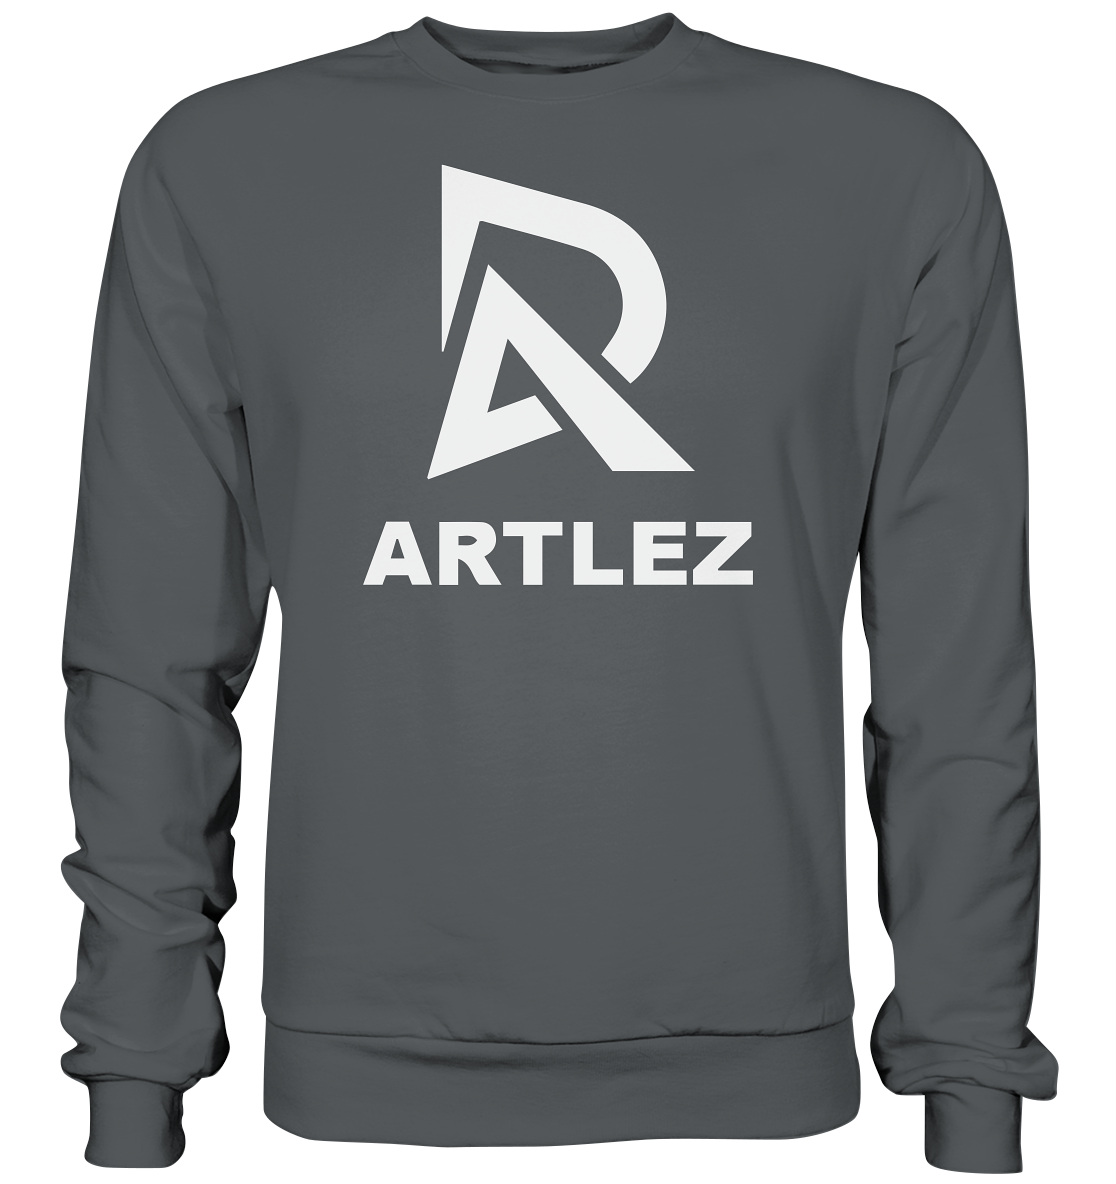 TEAM ARTLEZ - Basic Sweatshirt